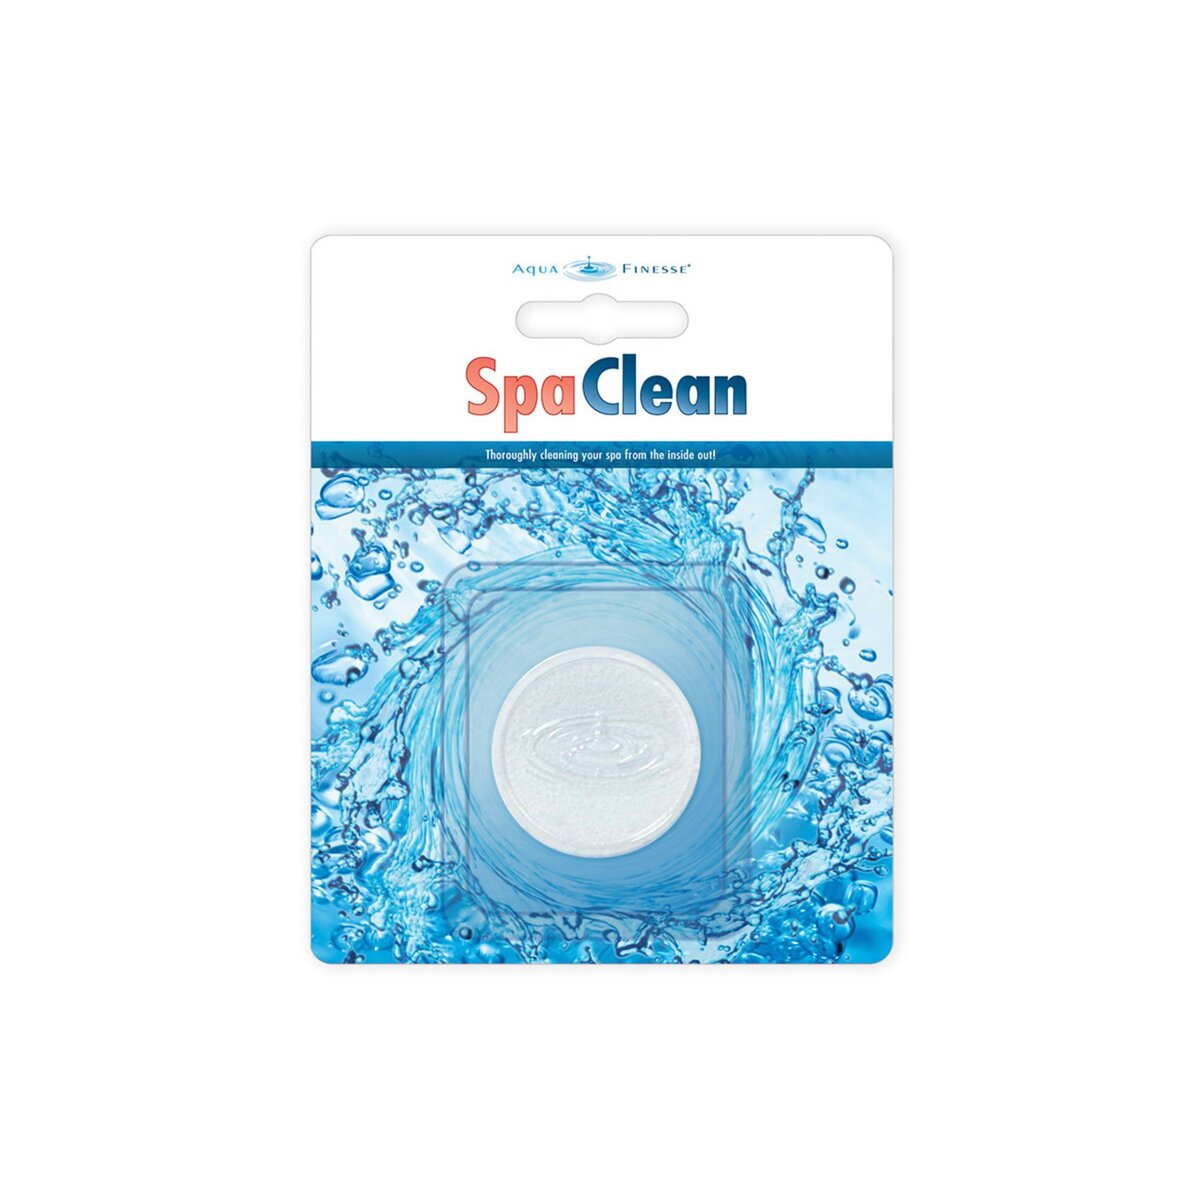 Aquafinesse Nettoyant Spa Clean pour spa - AquaFinesse